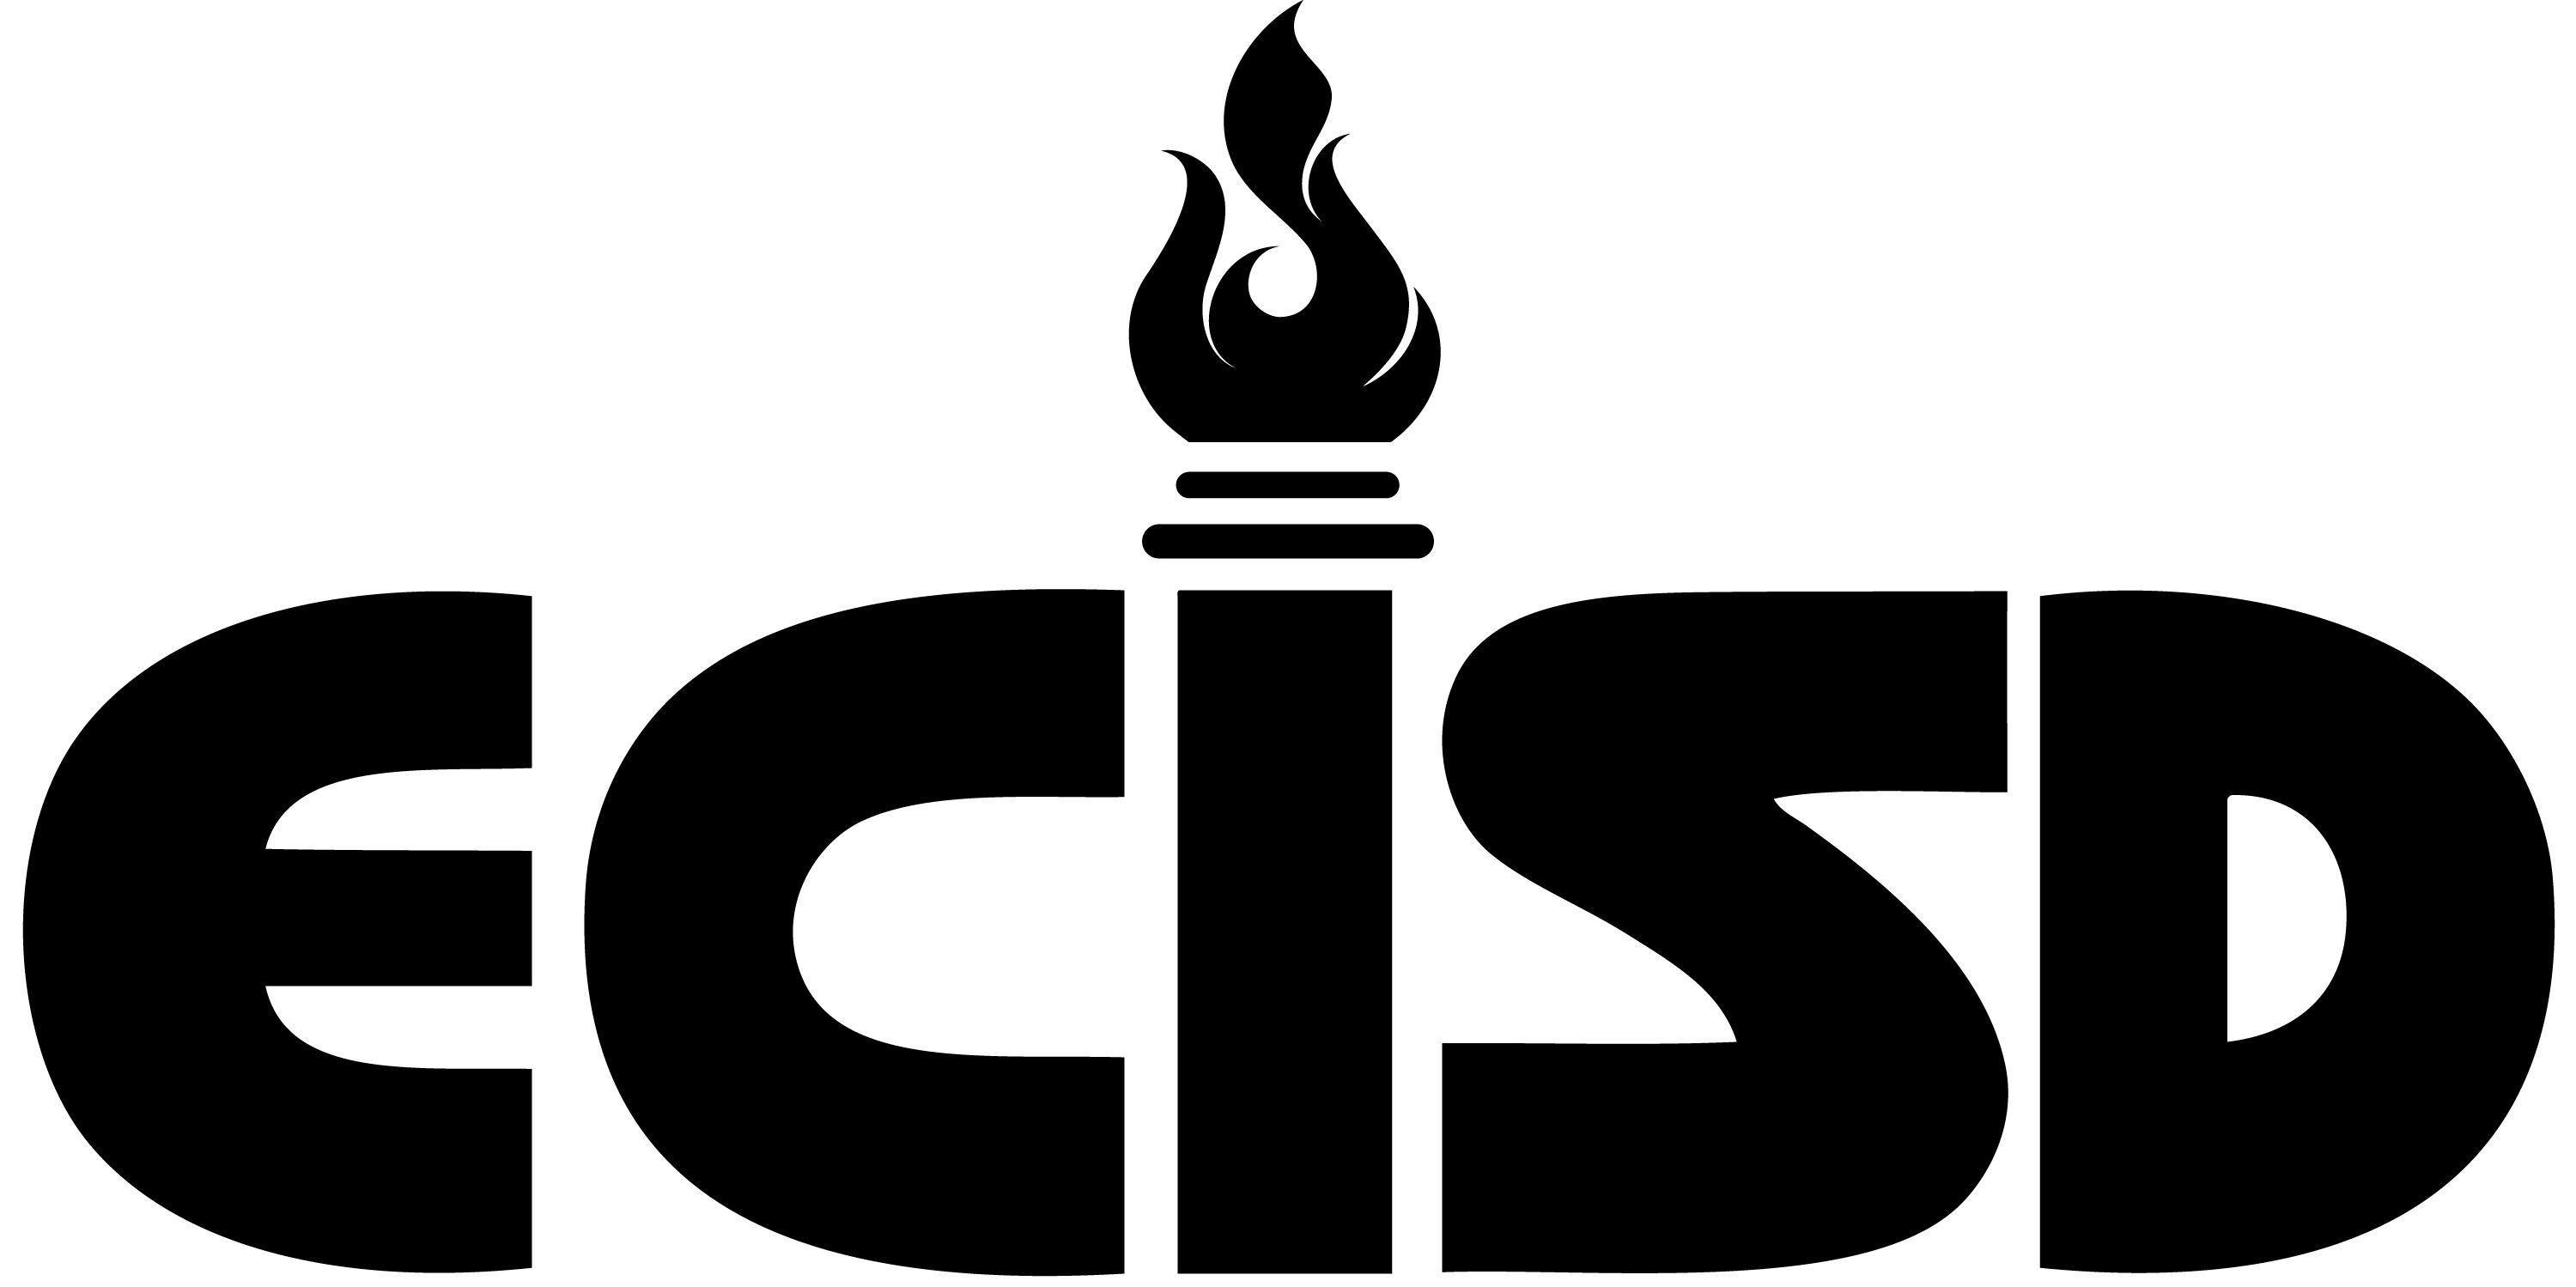 ECISD Logo - Communications / Graphics Standards